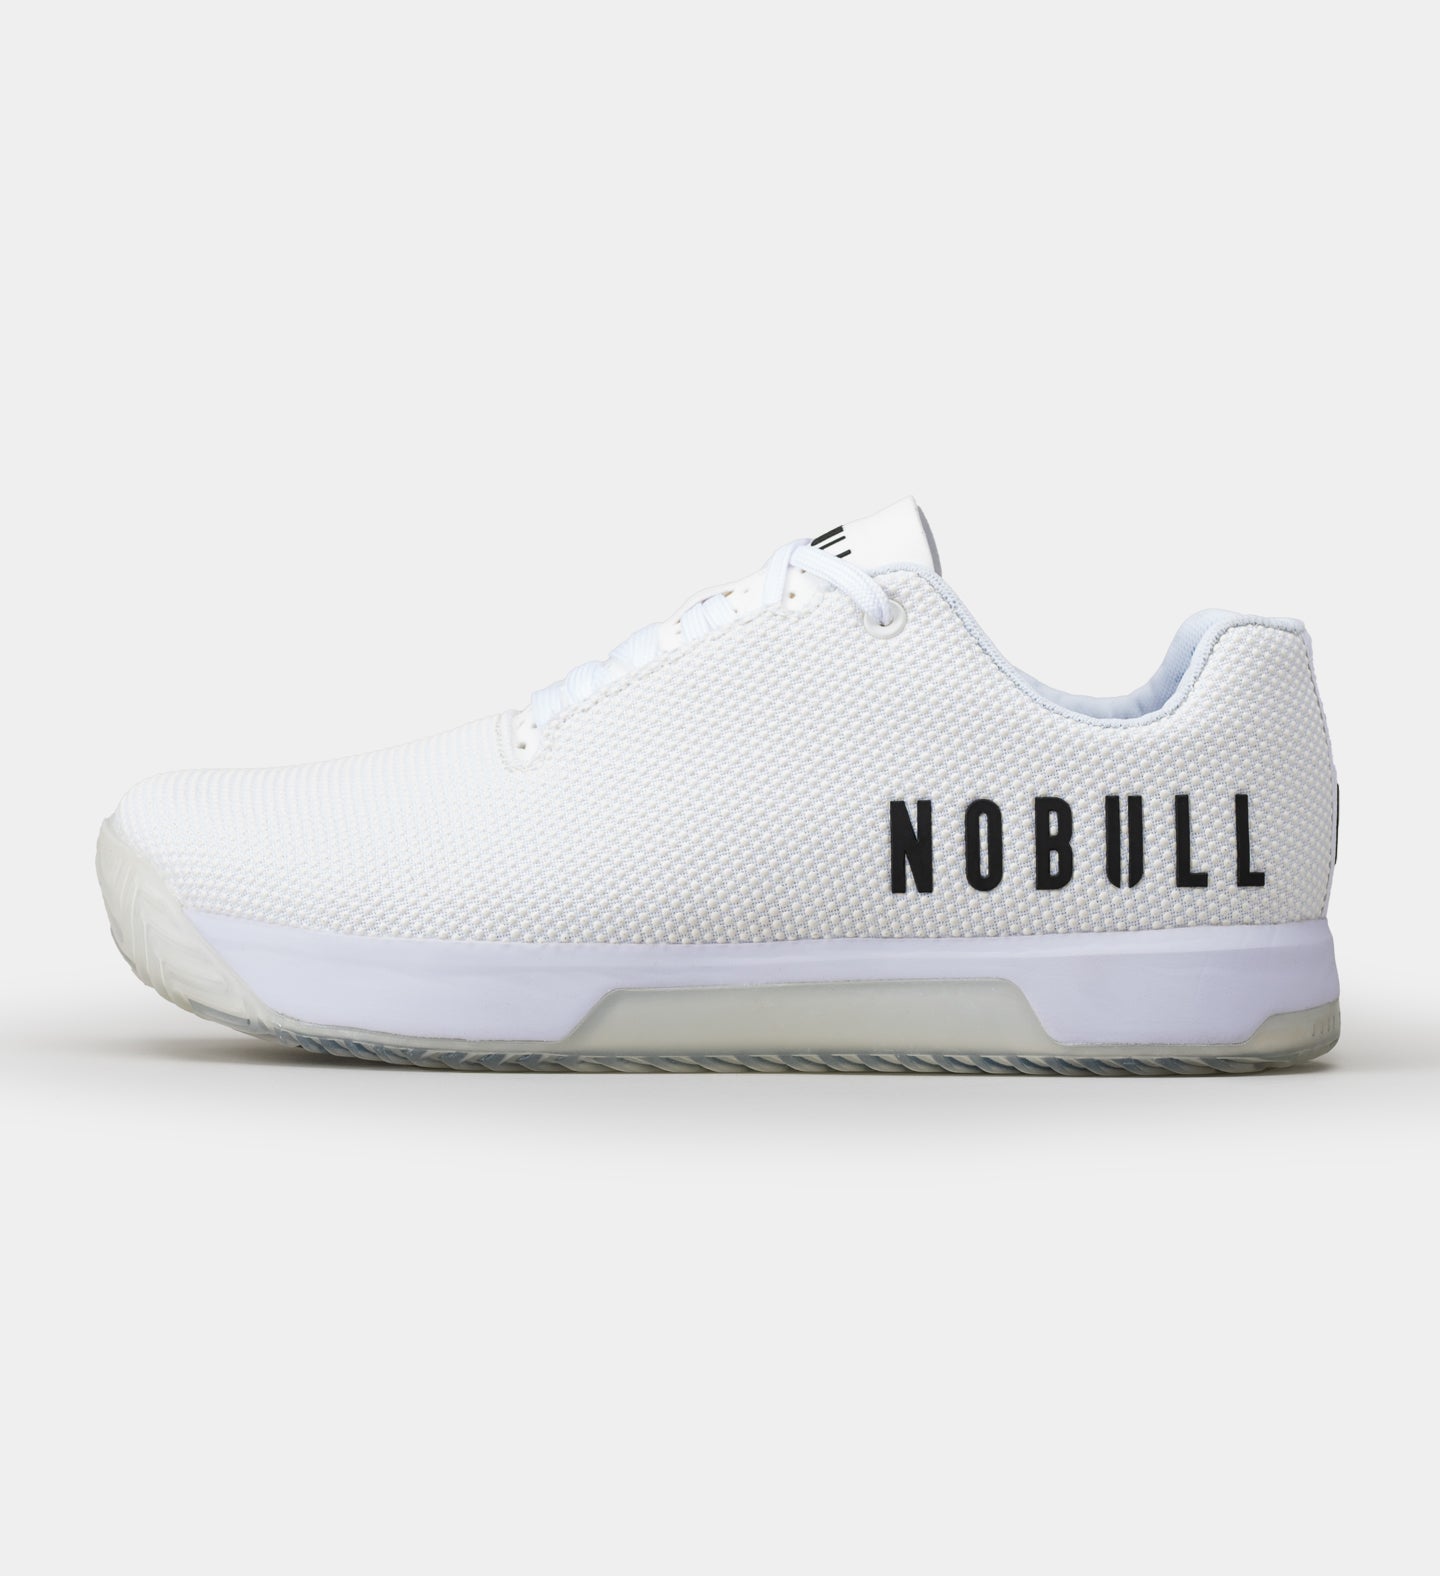 NOBULL - Men's Canvas Trainer - White - Size 13.5